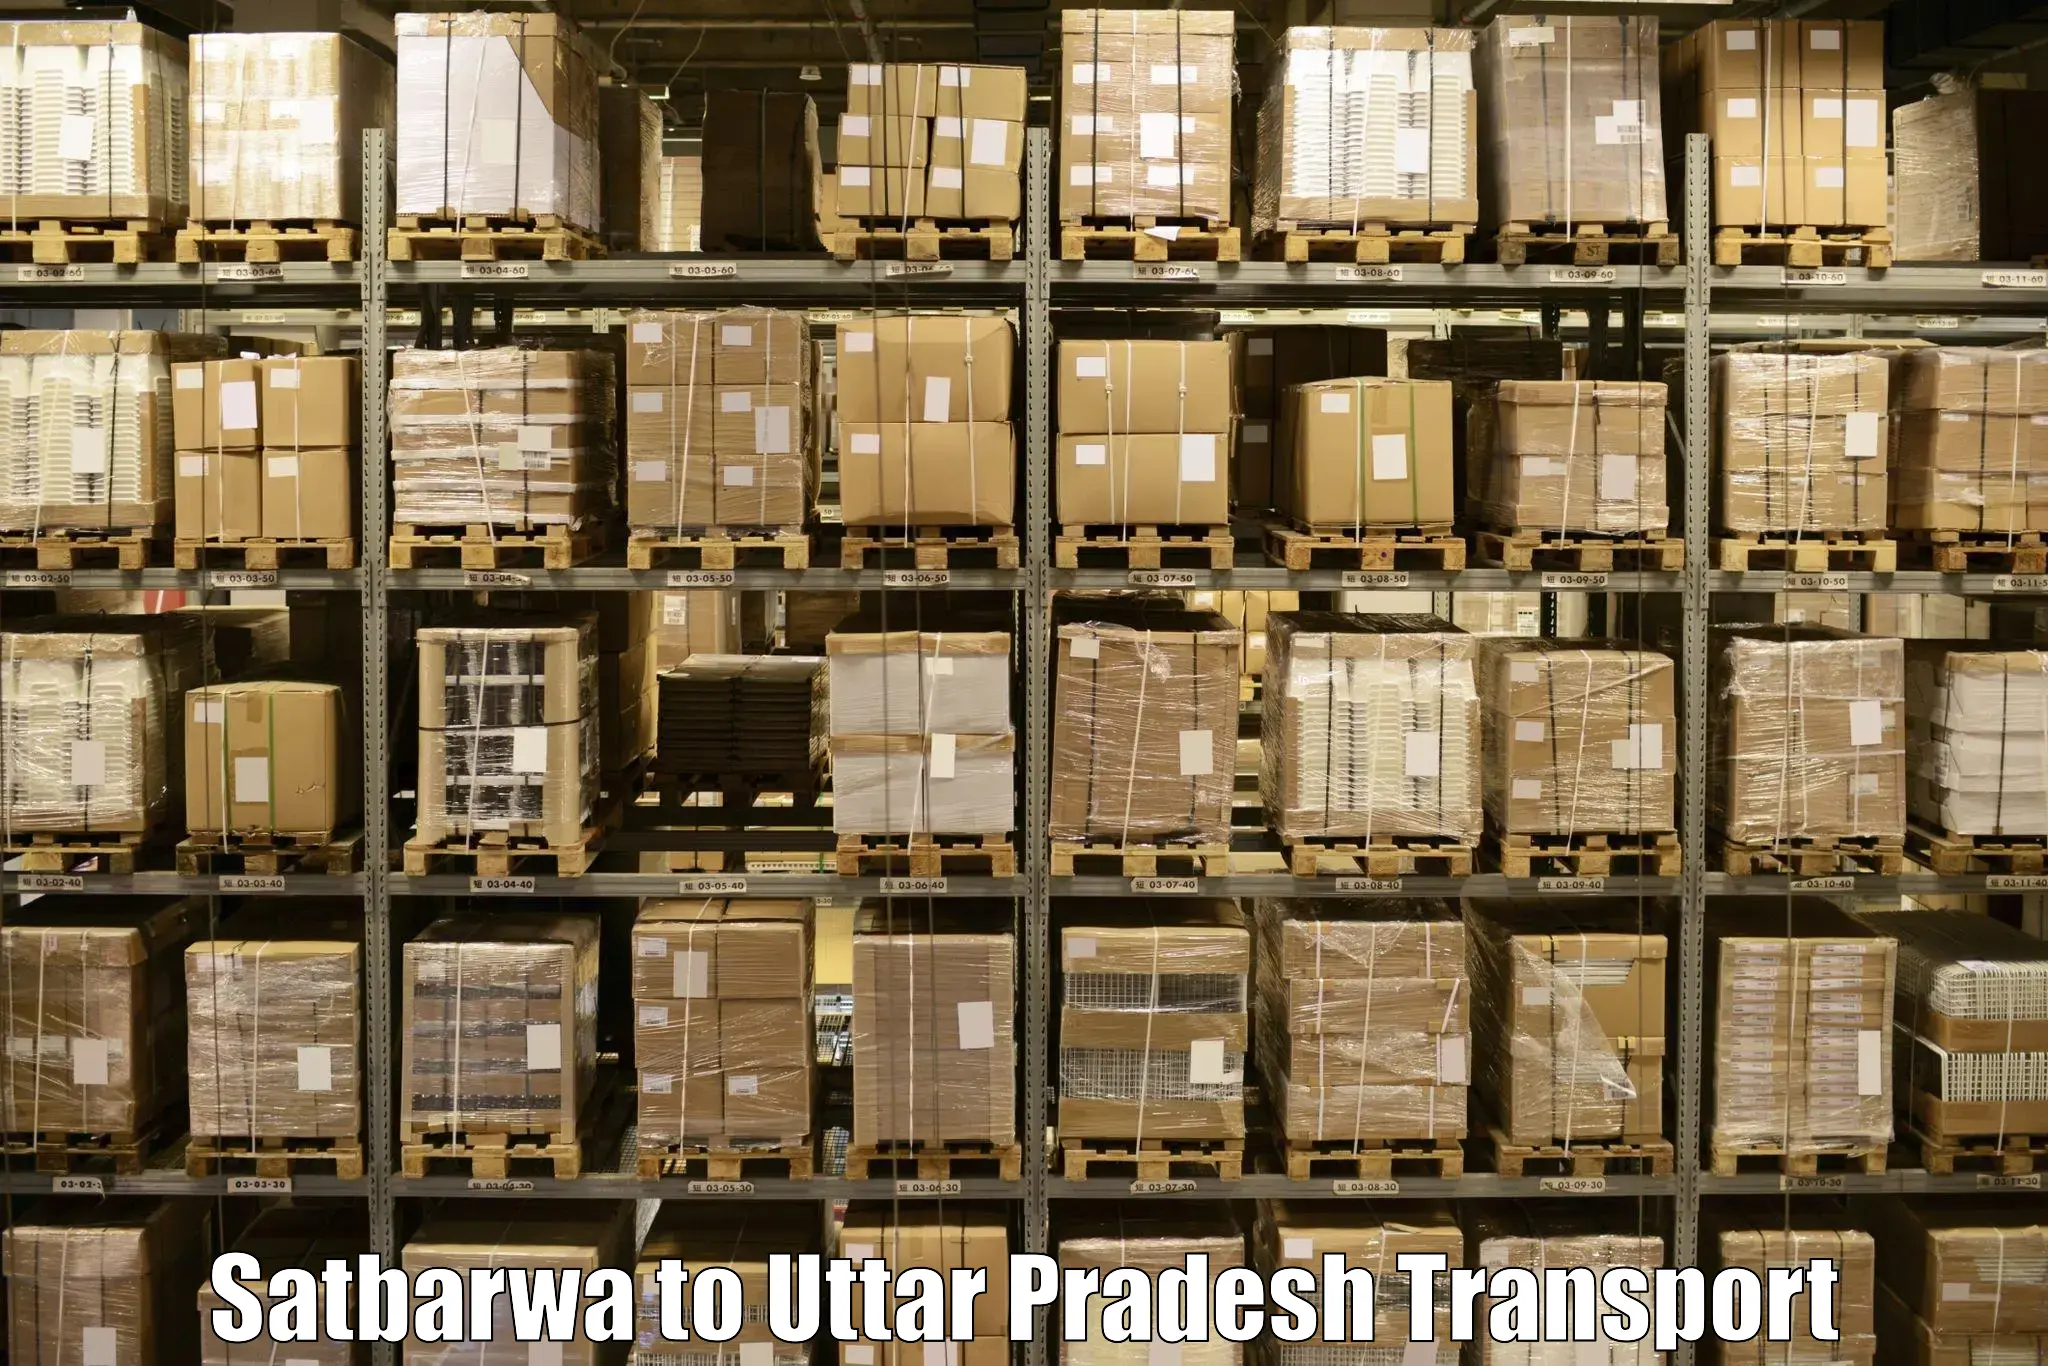 Domestic goods transportation services in Satbarwa to Sahatwar